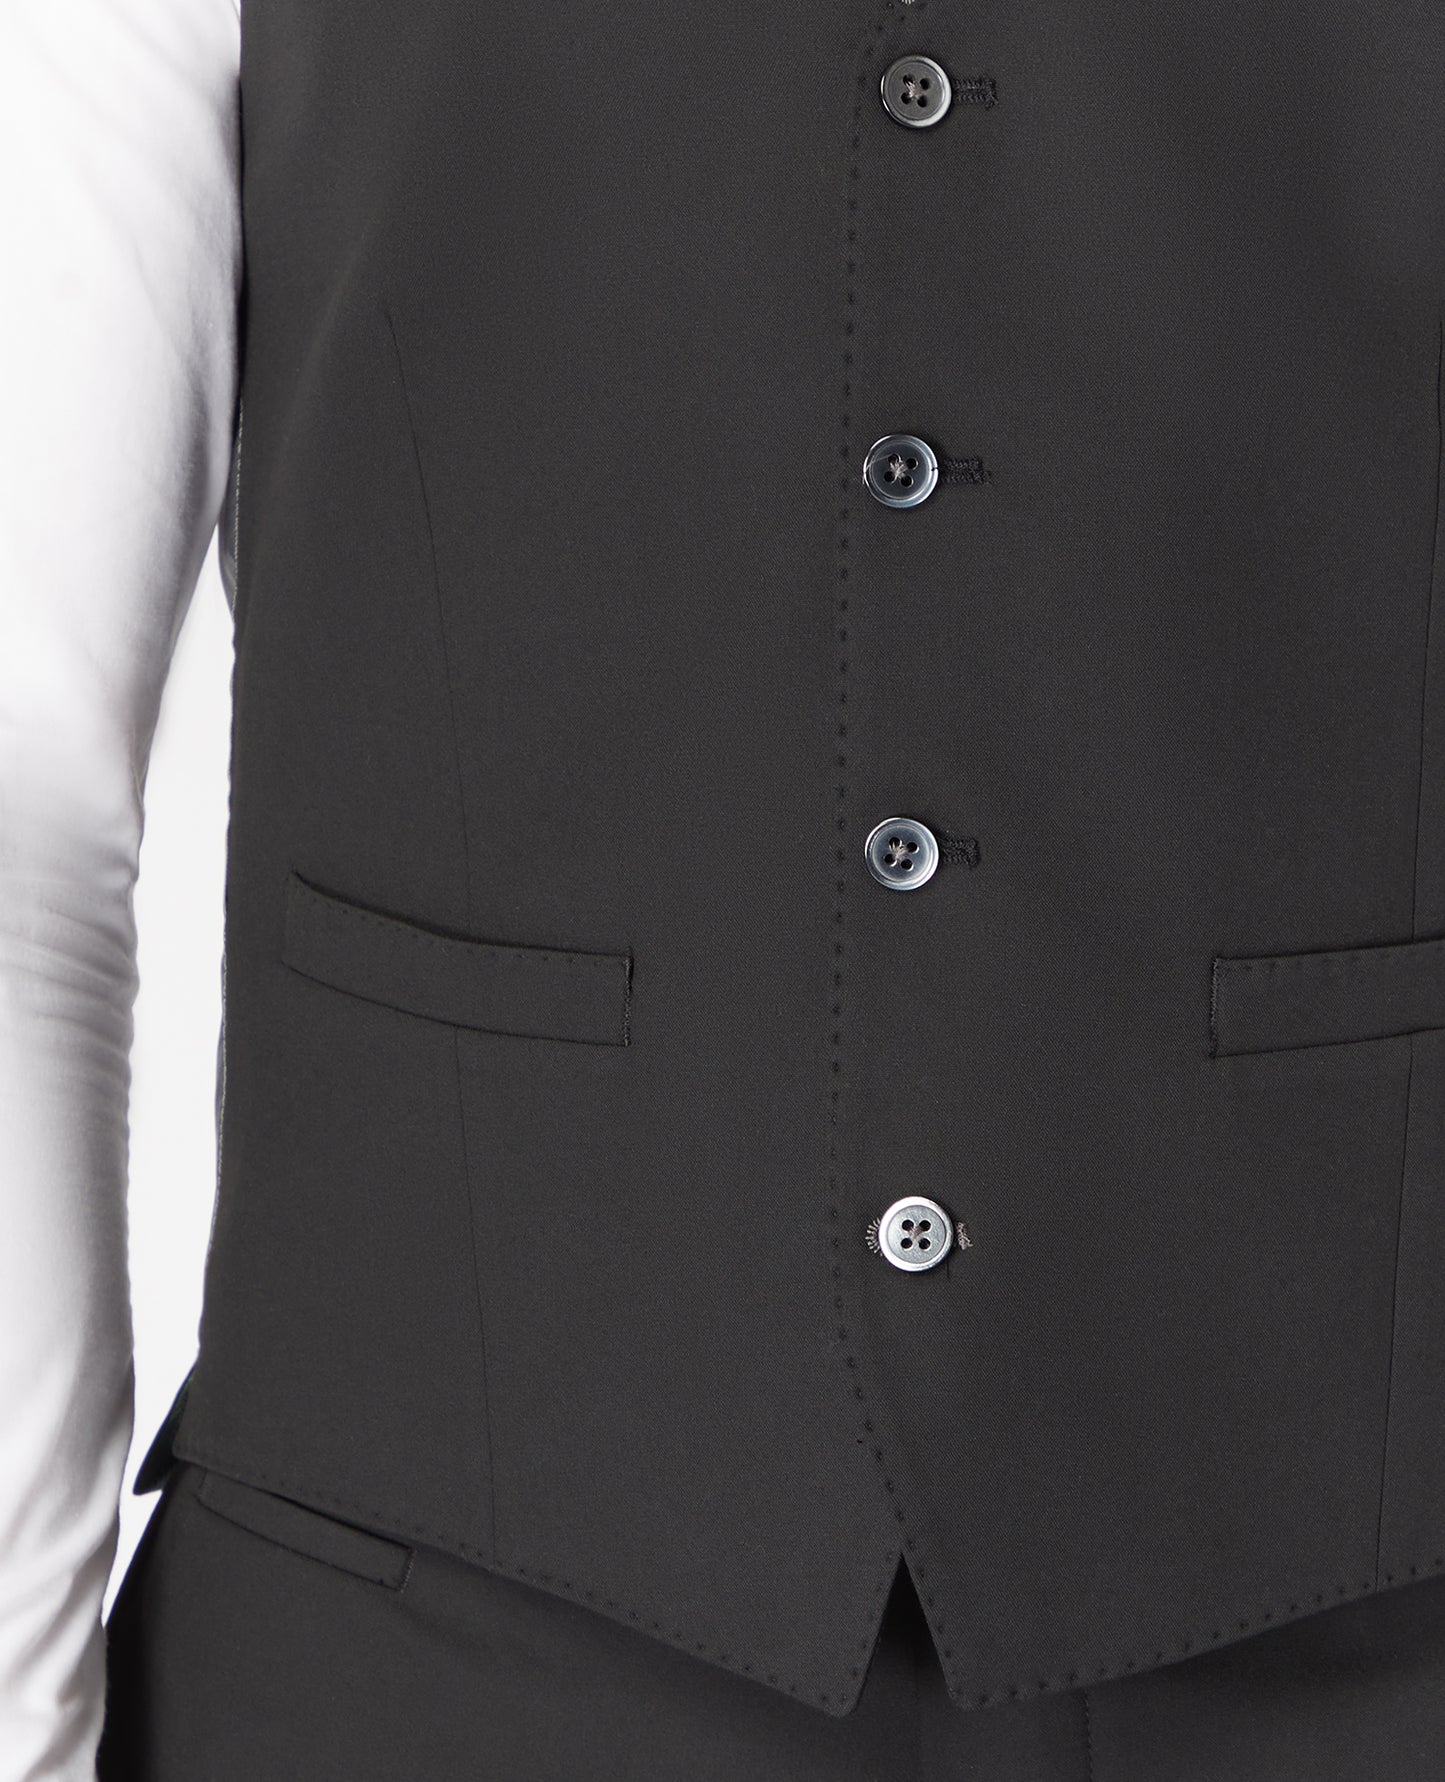 Slim Fit Polyviscose Suit Waistcoat - Black